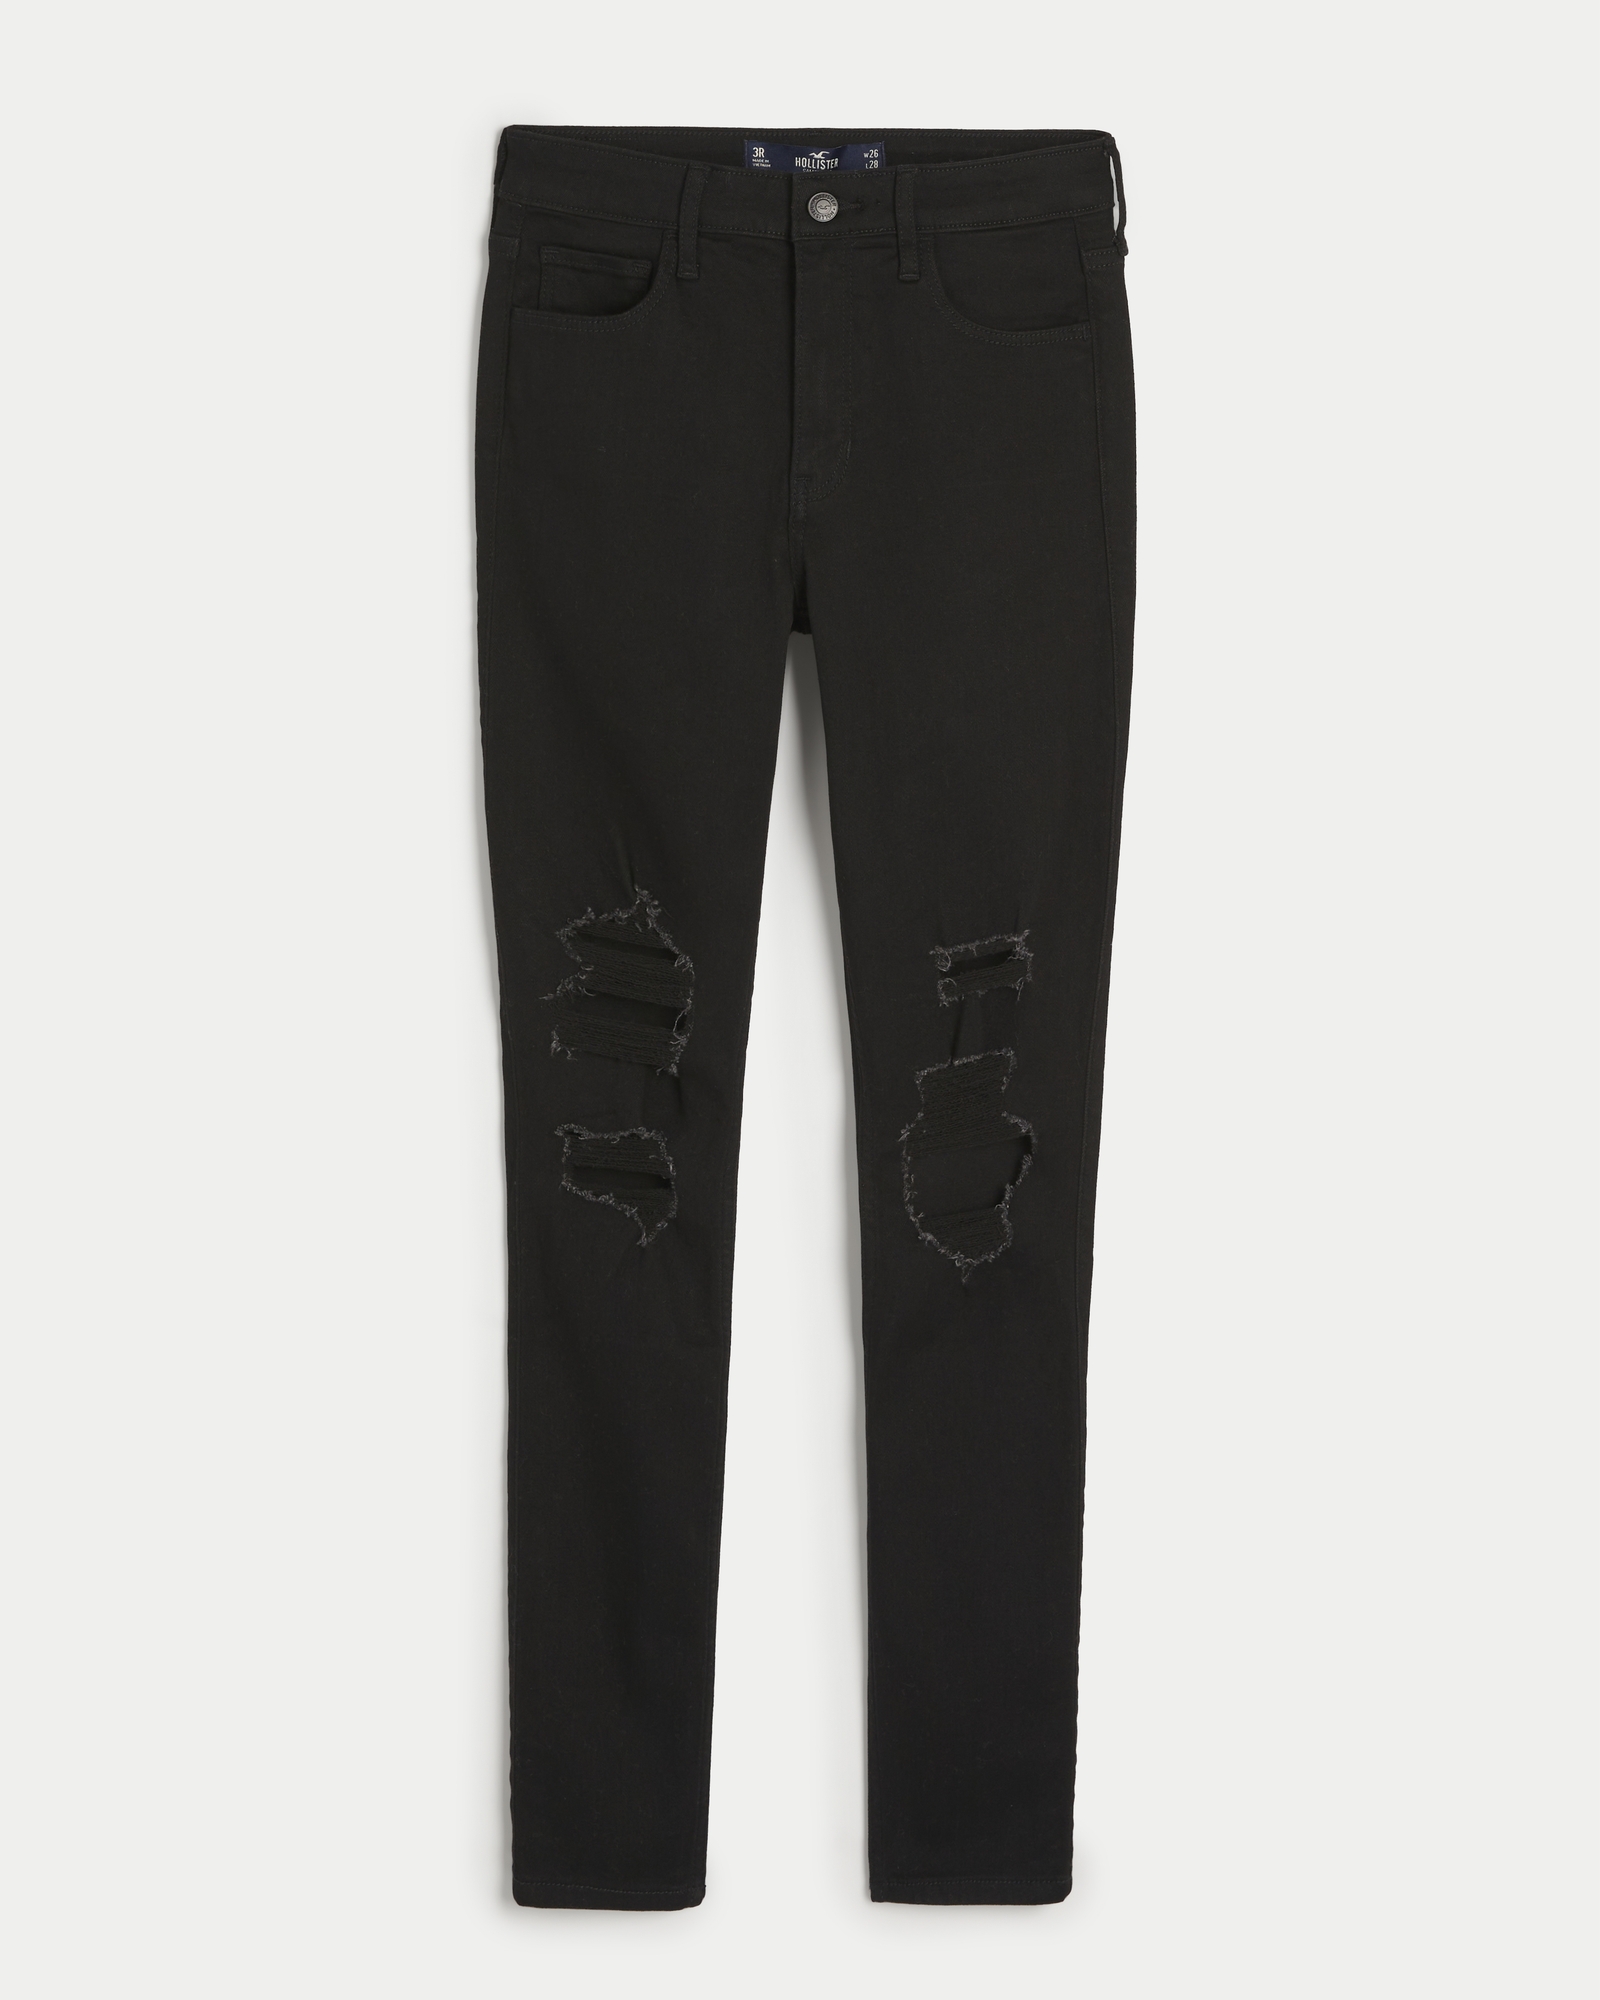 Hollister Jeggings Women's Size 00 Regular Black High Rise Skinny Jeans  Stretch